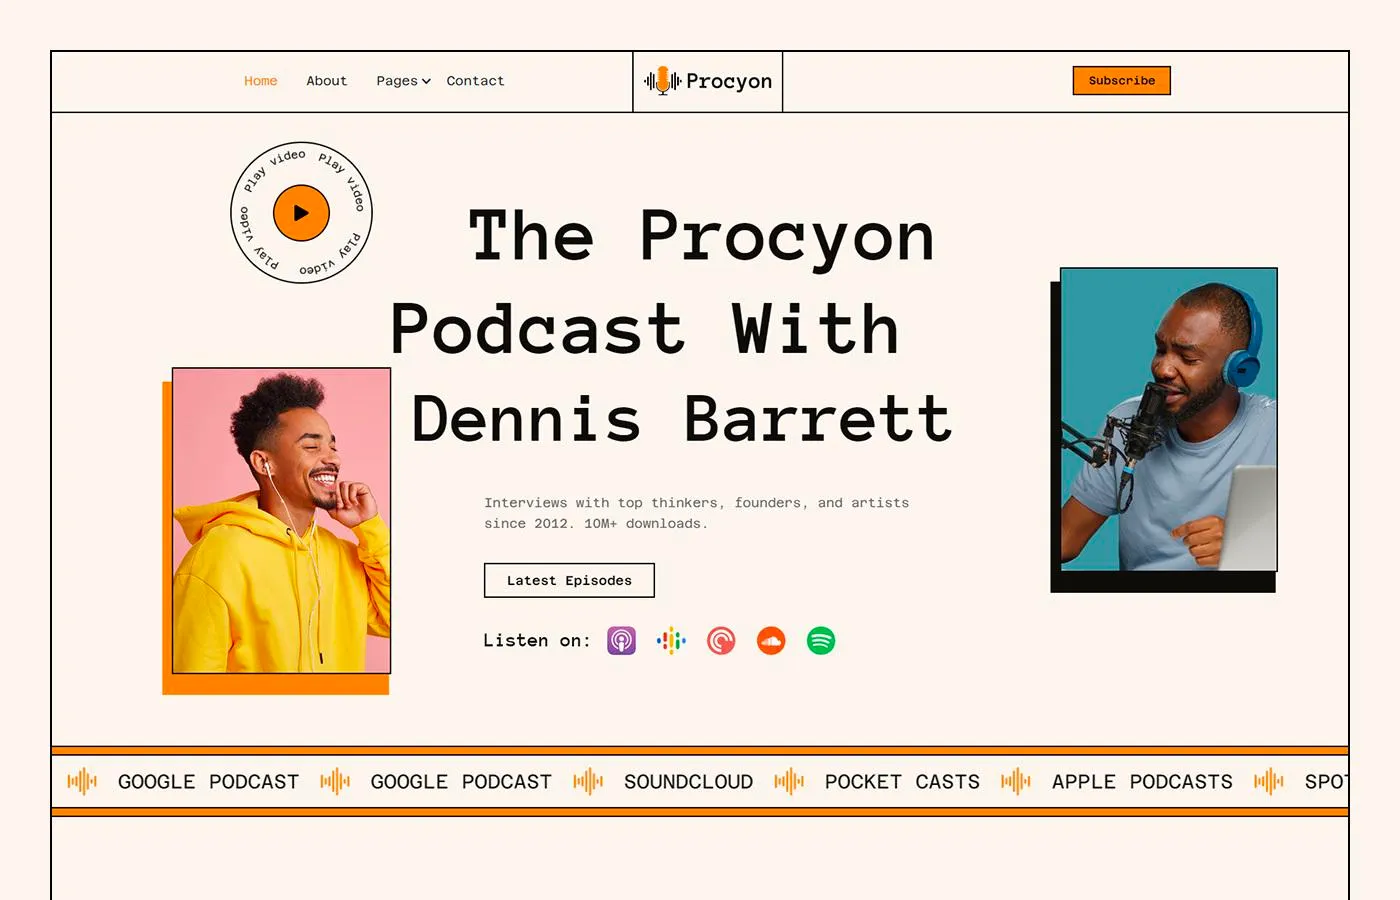 Procyon podcast website template